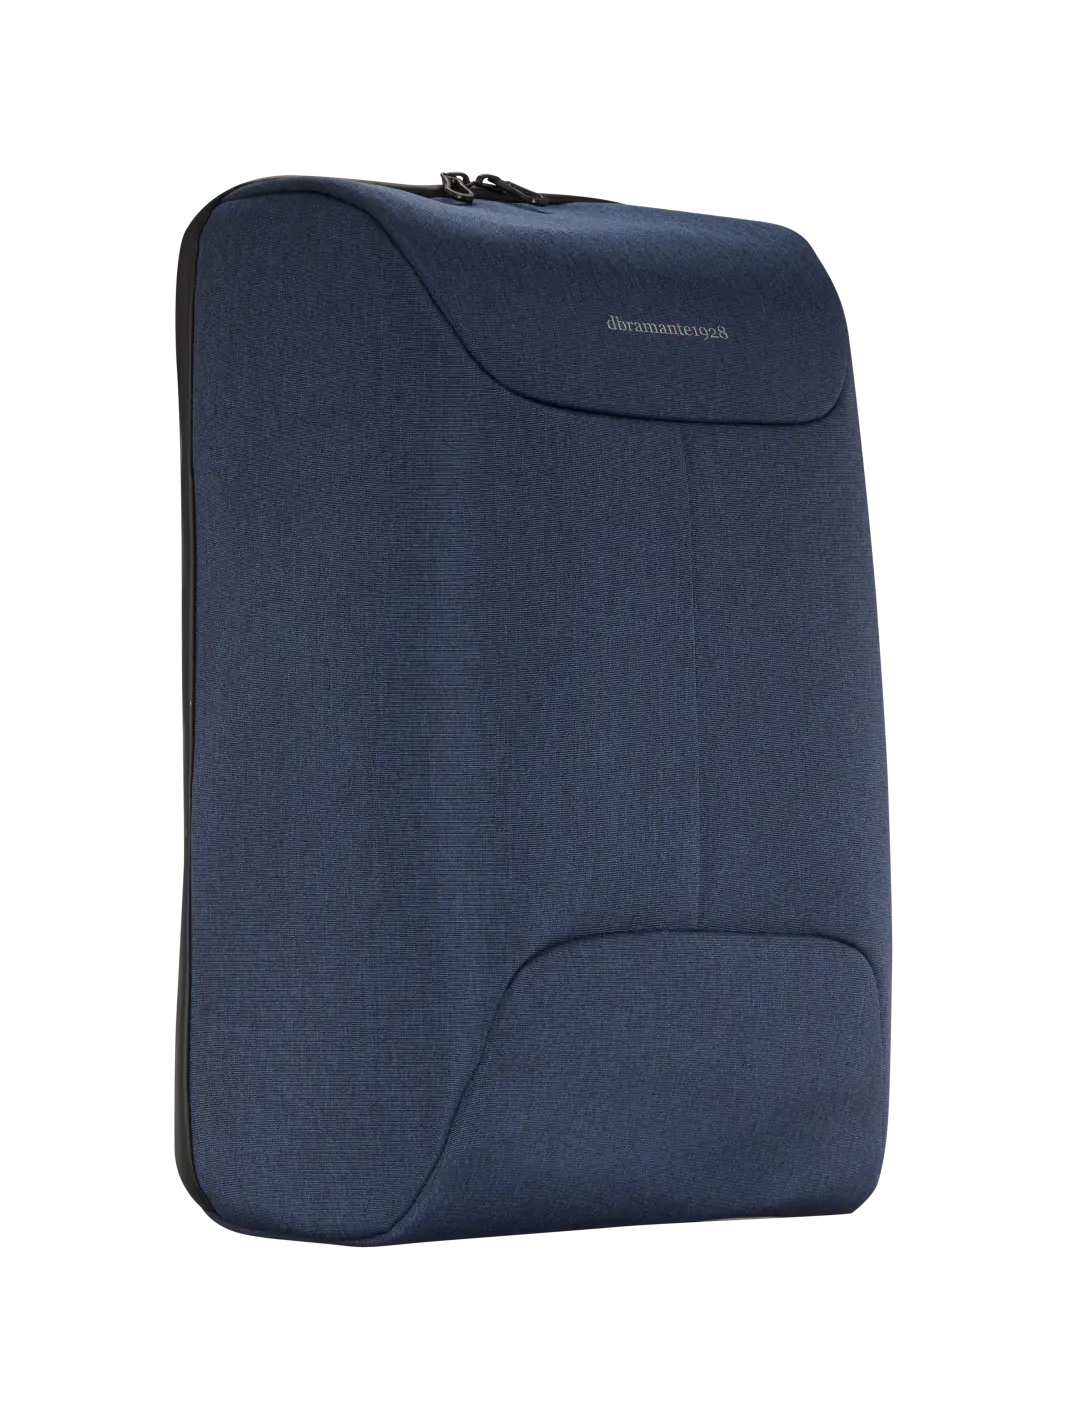 Charlottenborg Dark blue 30 x 42 x 21 cm Backpack